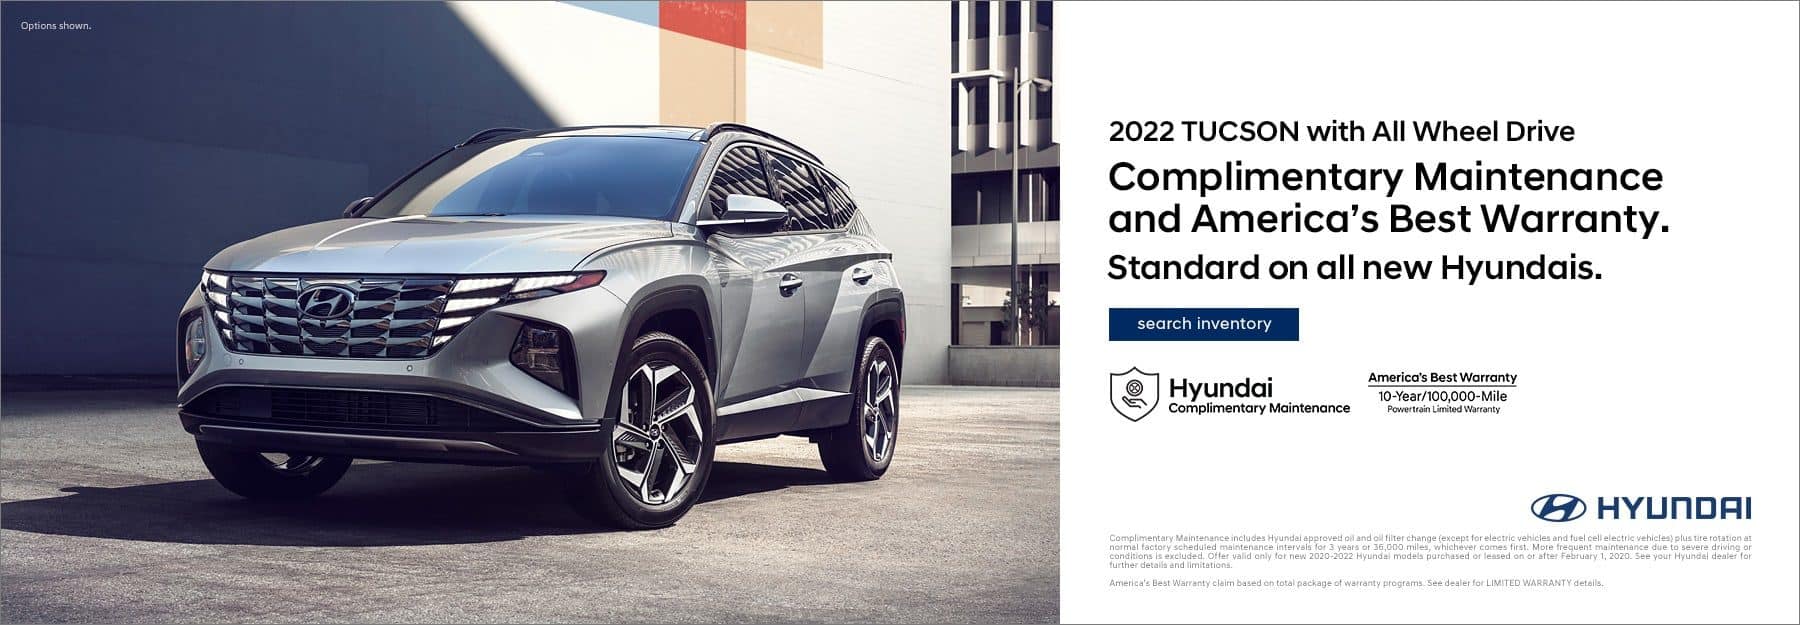 2022 Hyundai Tucson complimentary maintenance